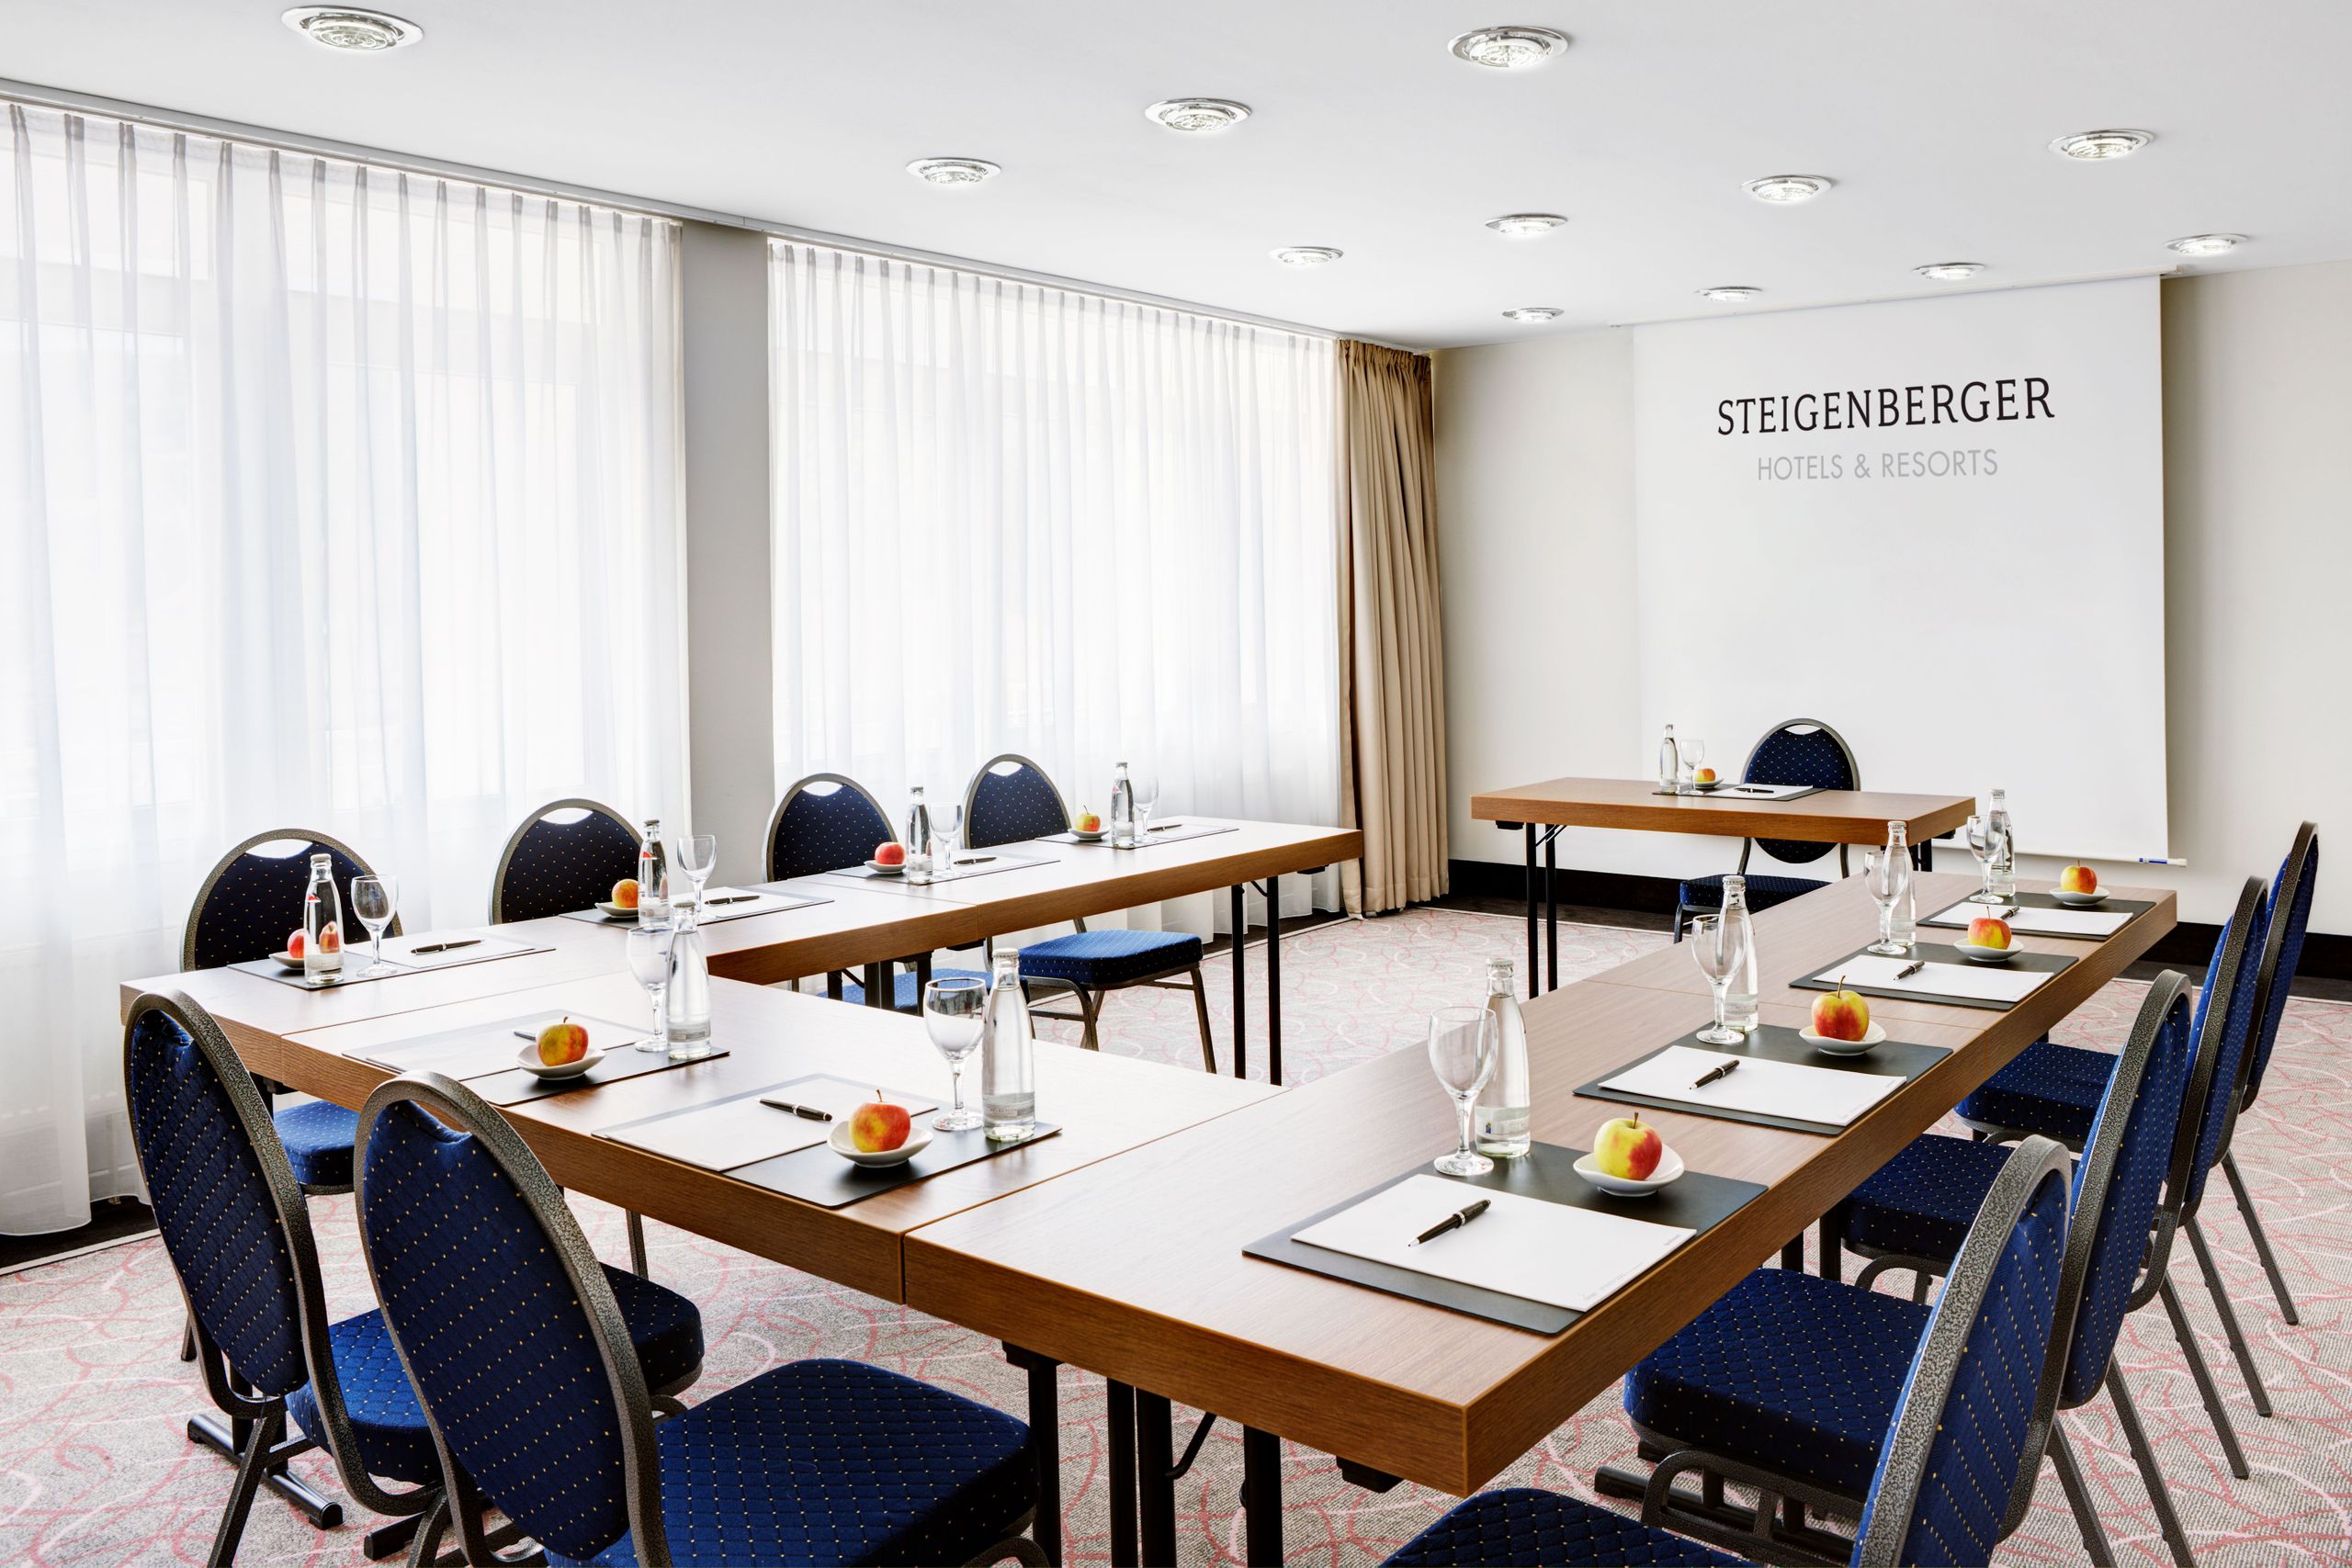 Steigenberger Hotel Bad Neuenahr - Meetings